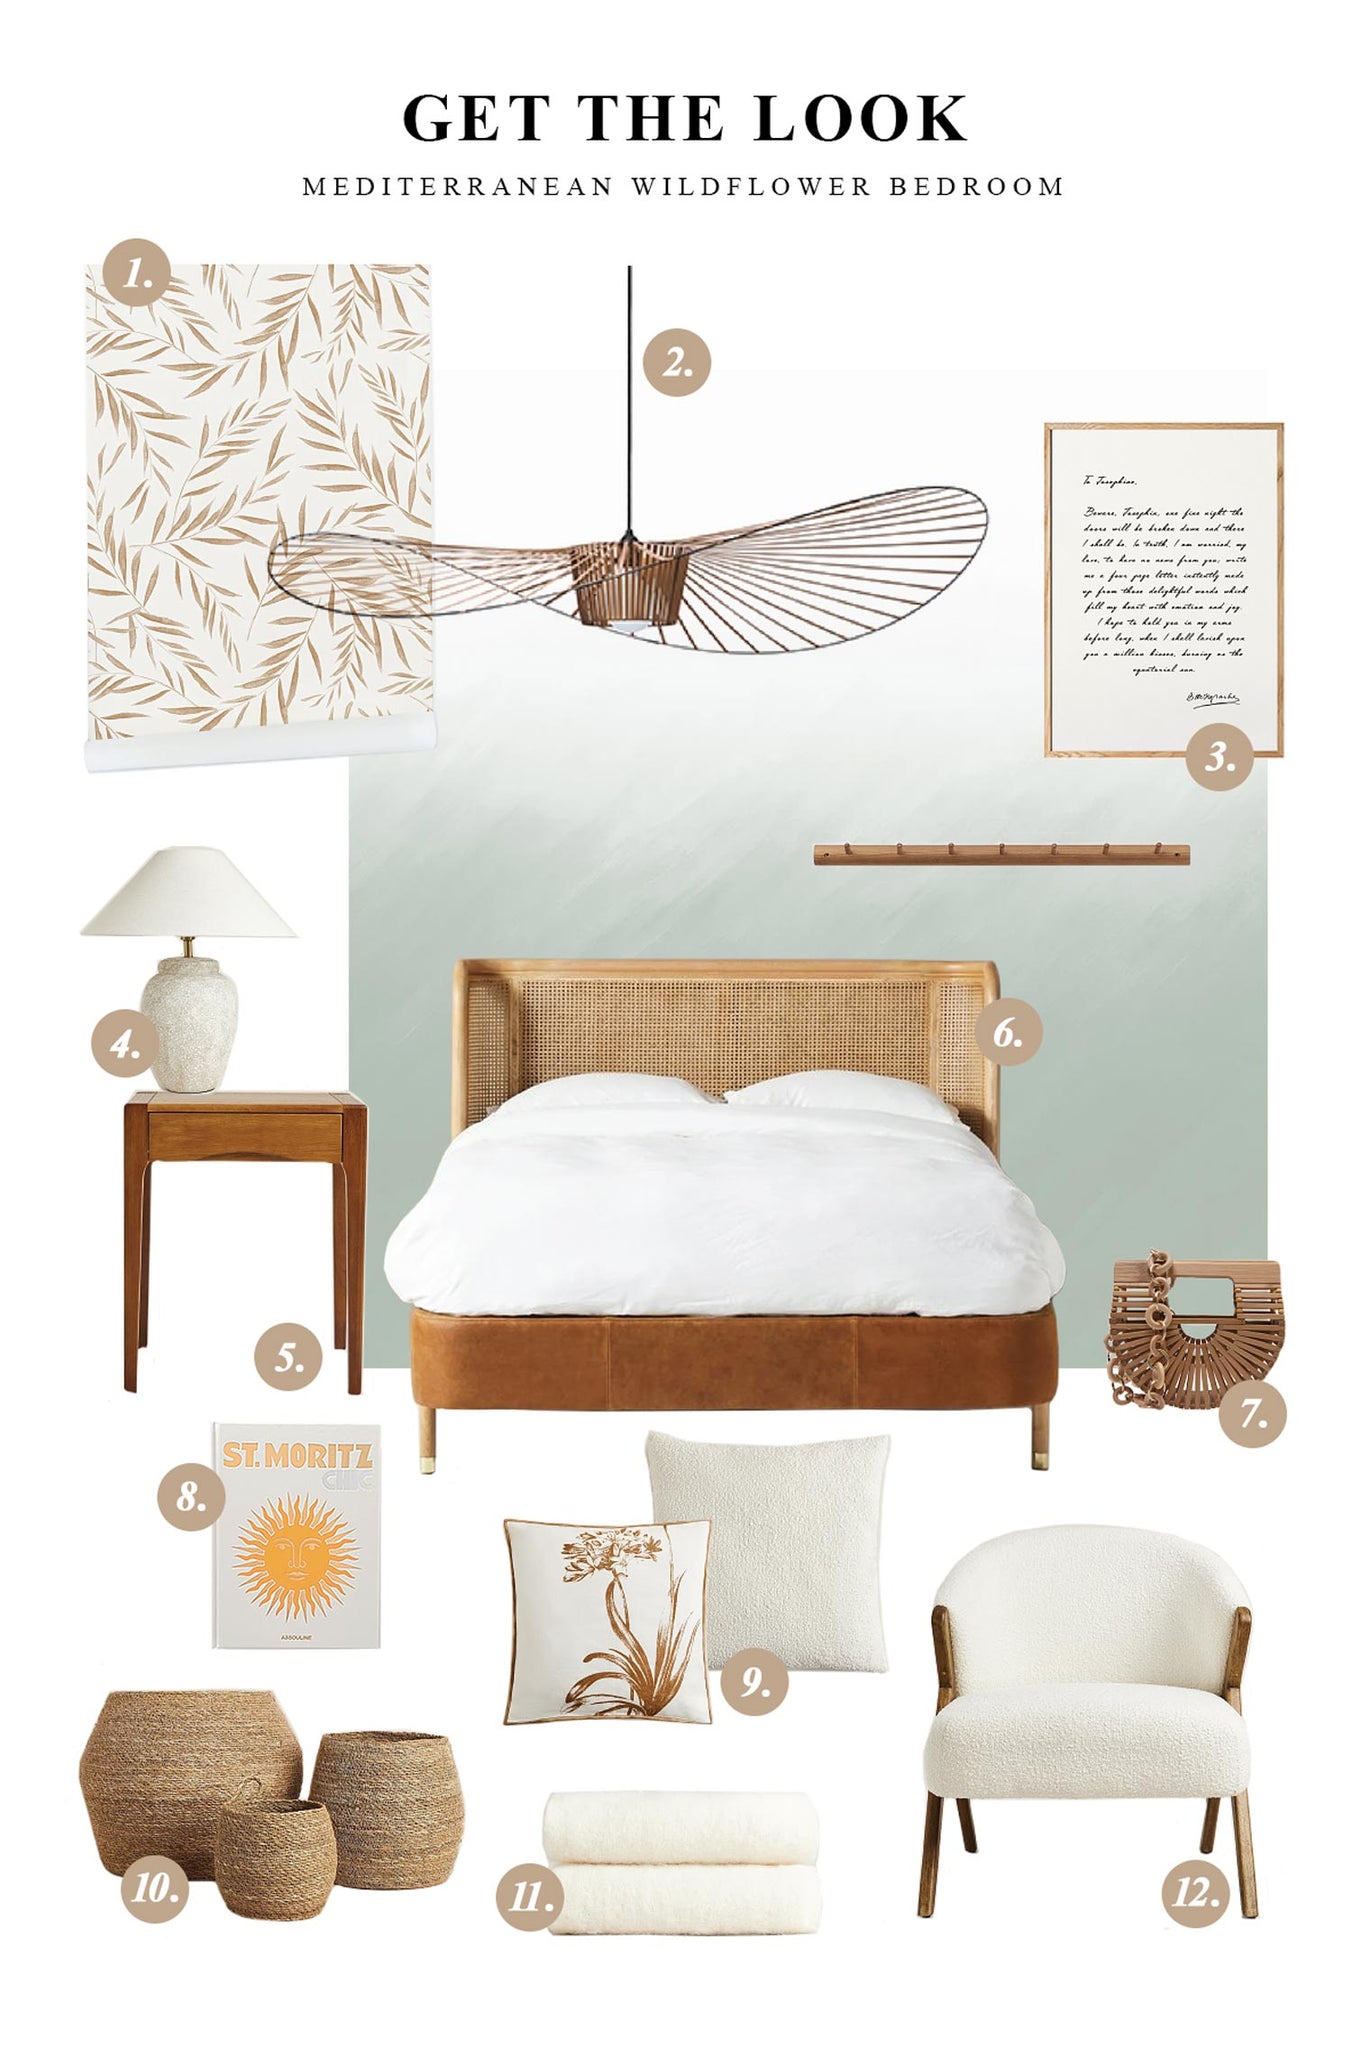 Chic master bedroom interior with mediterranean interior vibe and neutral earth tones interior decor elements